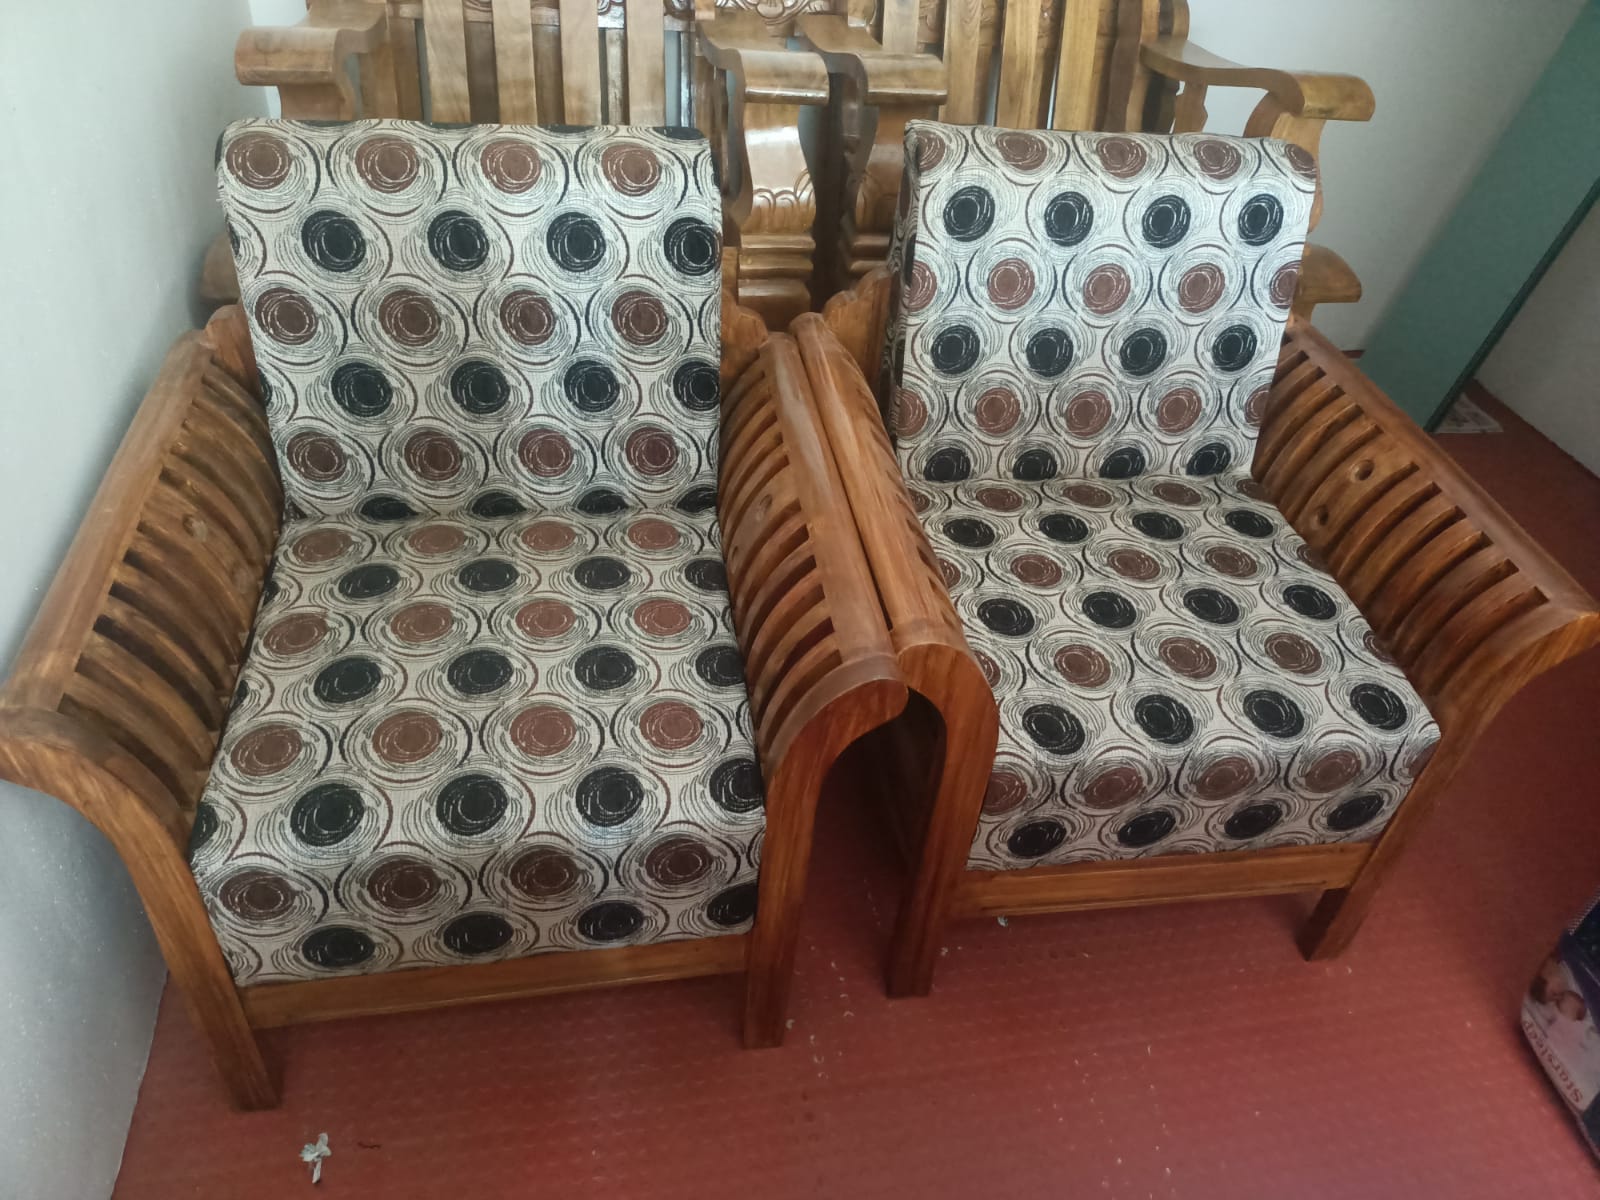 Sofa Repair And Service In Pudukottai 